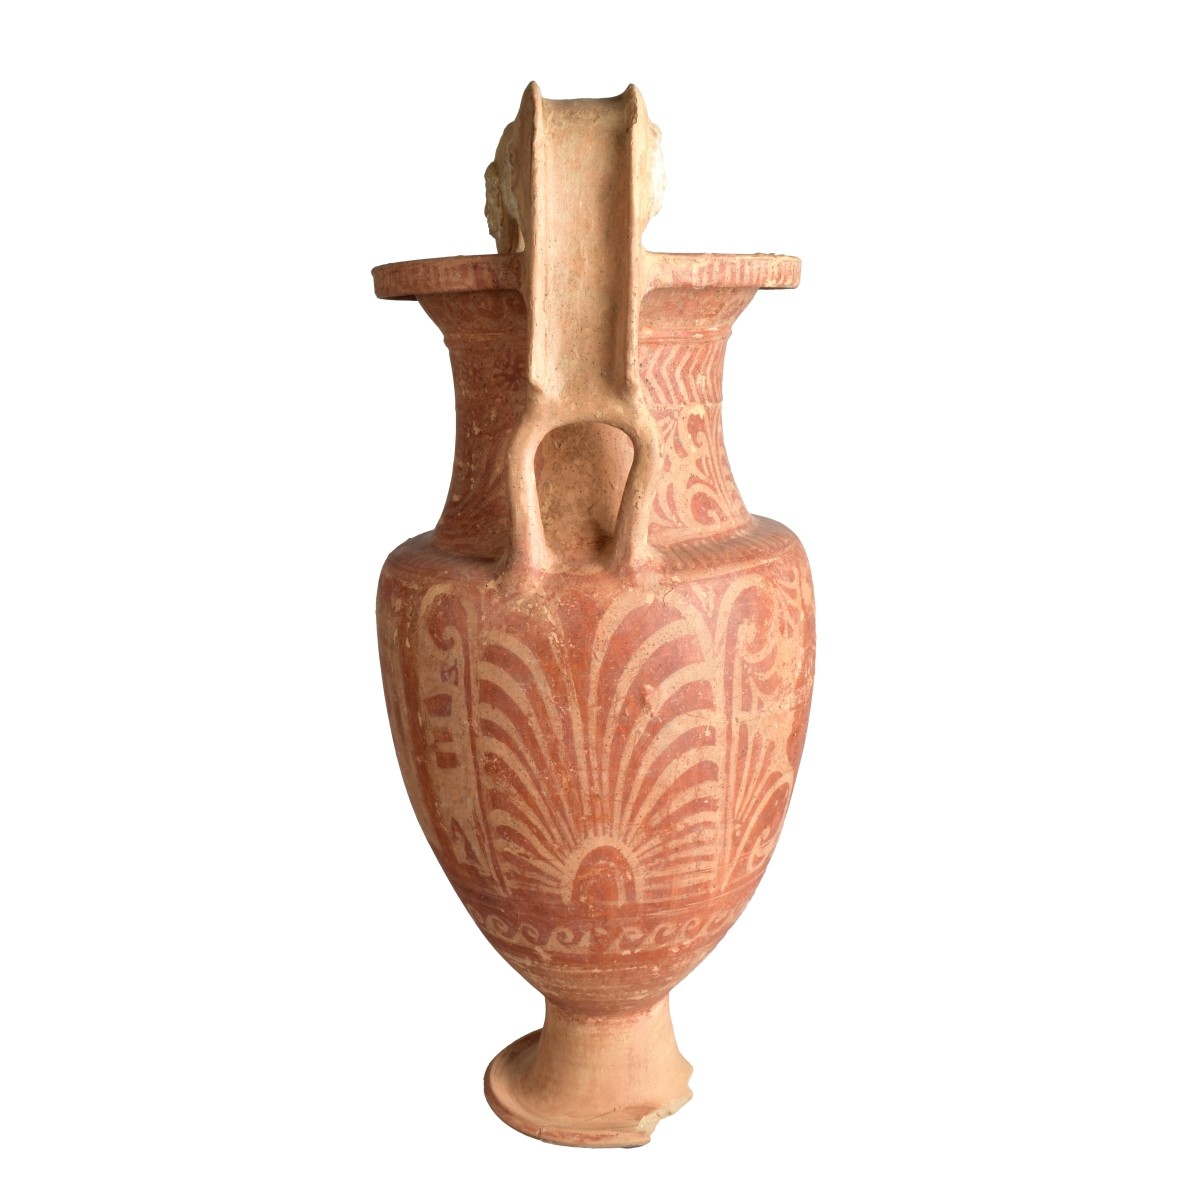 Circa 450 B.C. Greek Amphora Vase